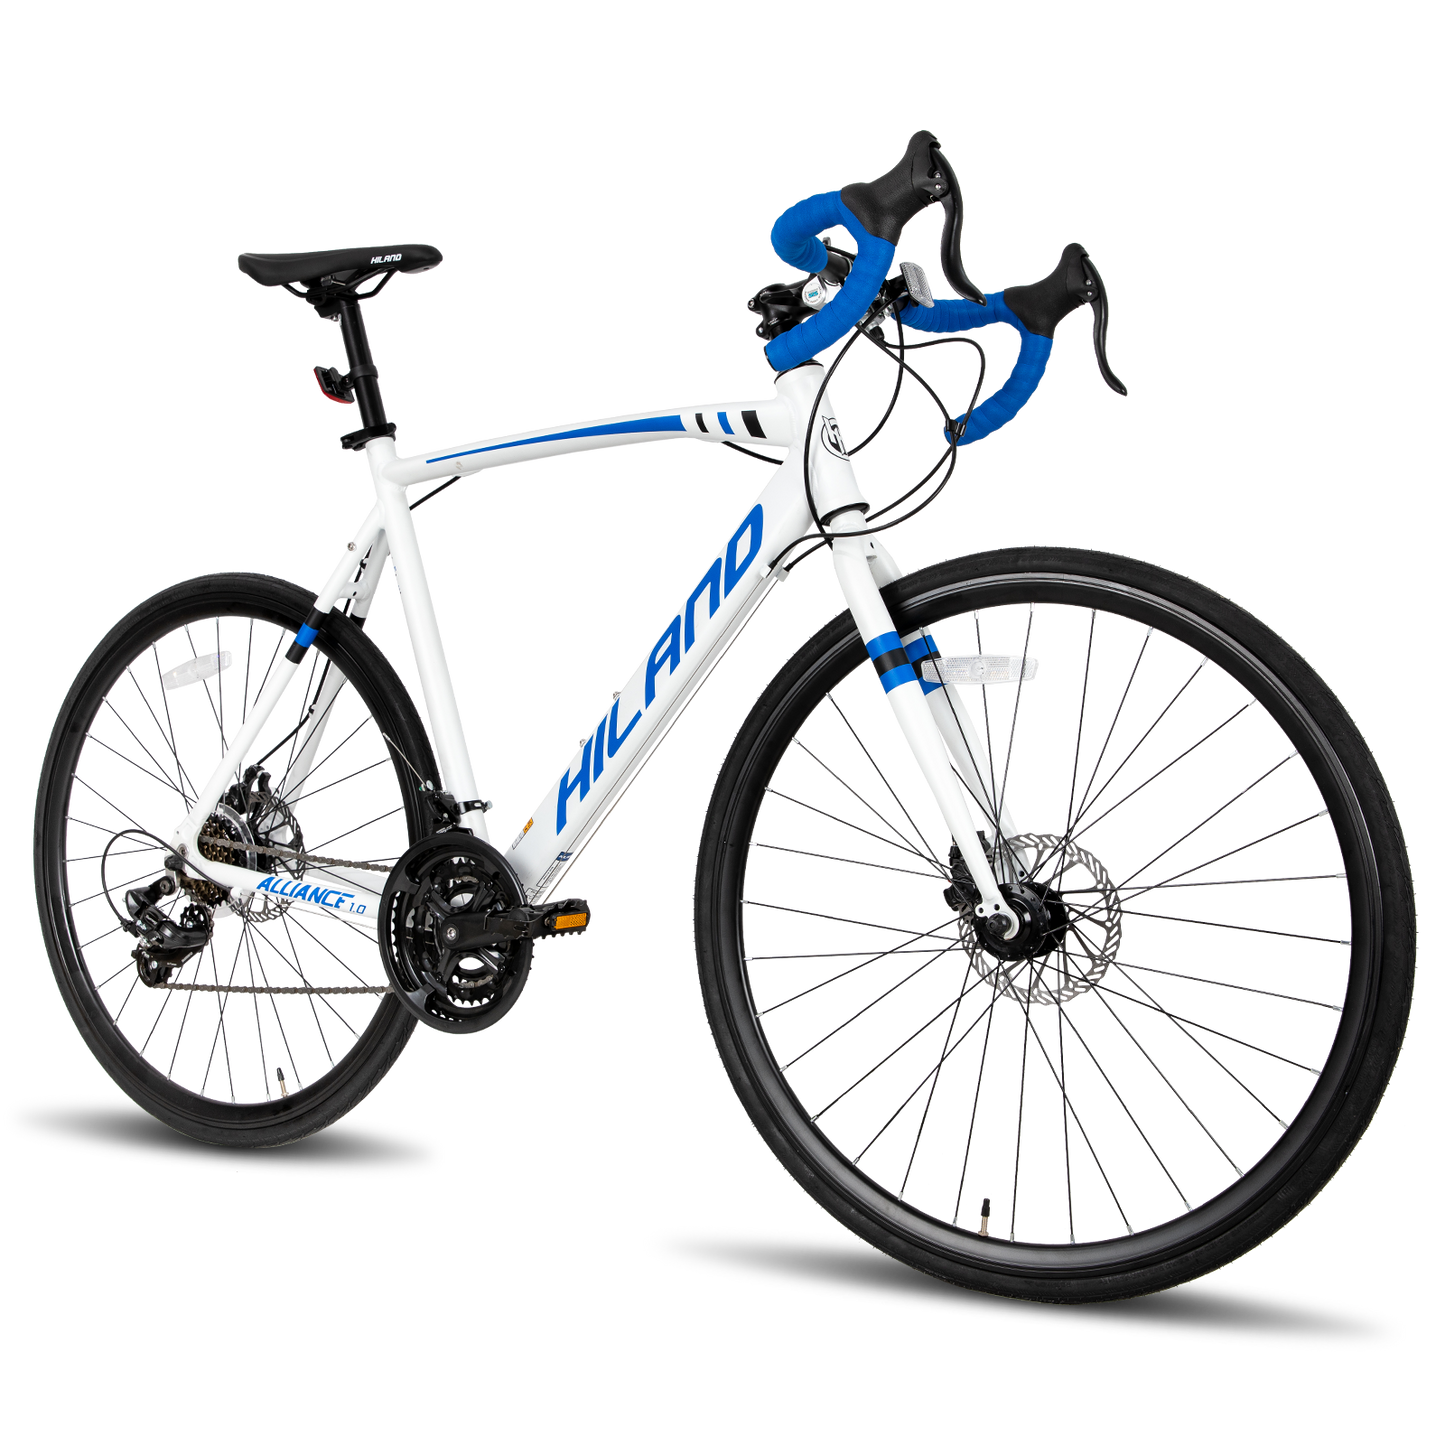 Hiland Aluminum Road Bicycle, 21 speeds Racing Bike, Disc Brake with 700C Wheels for Men - OutdoorExplorersKit